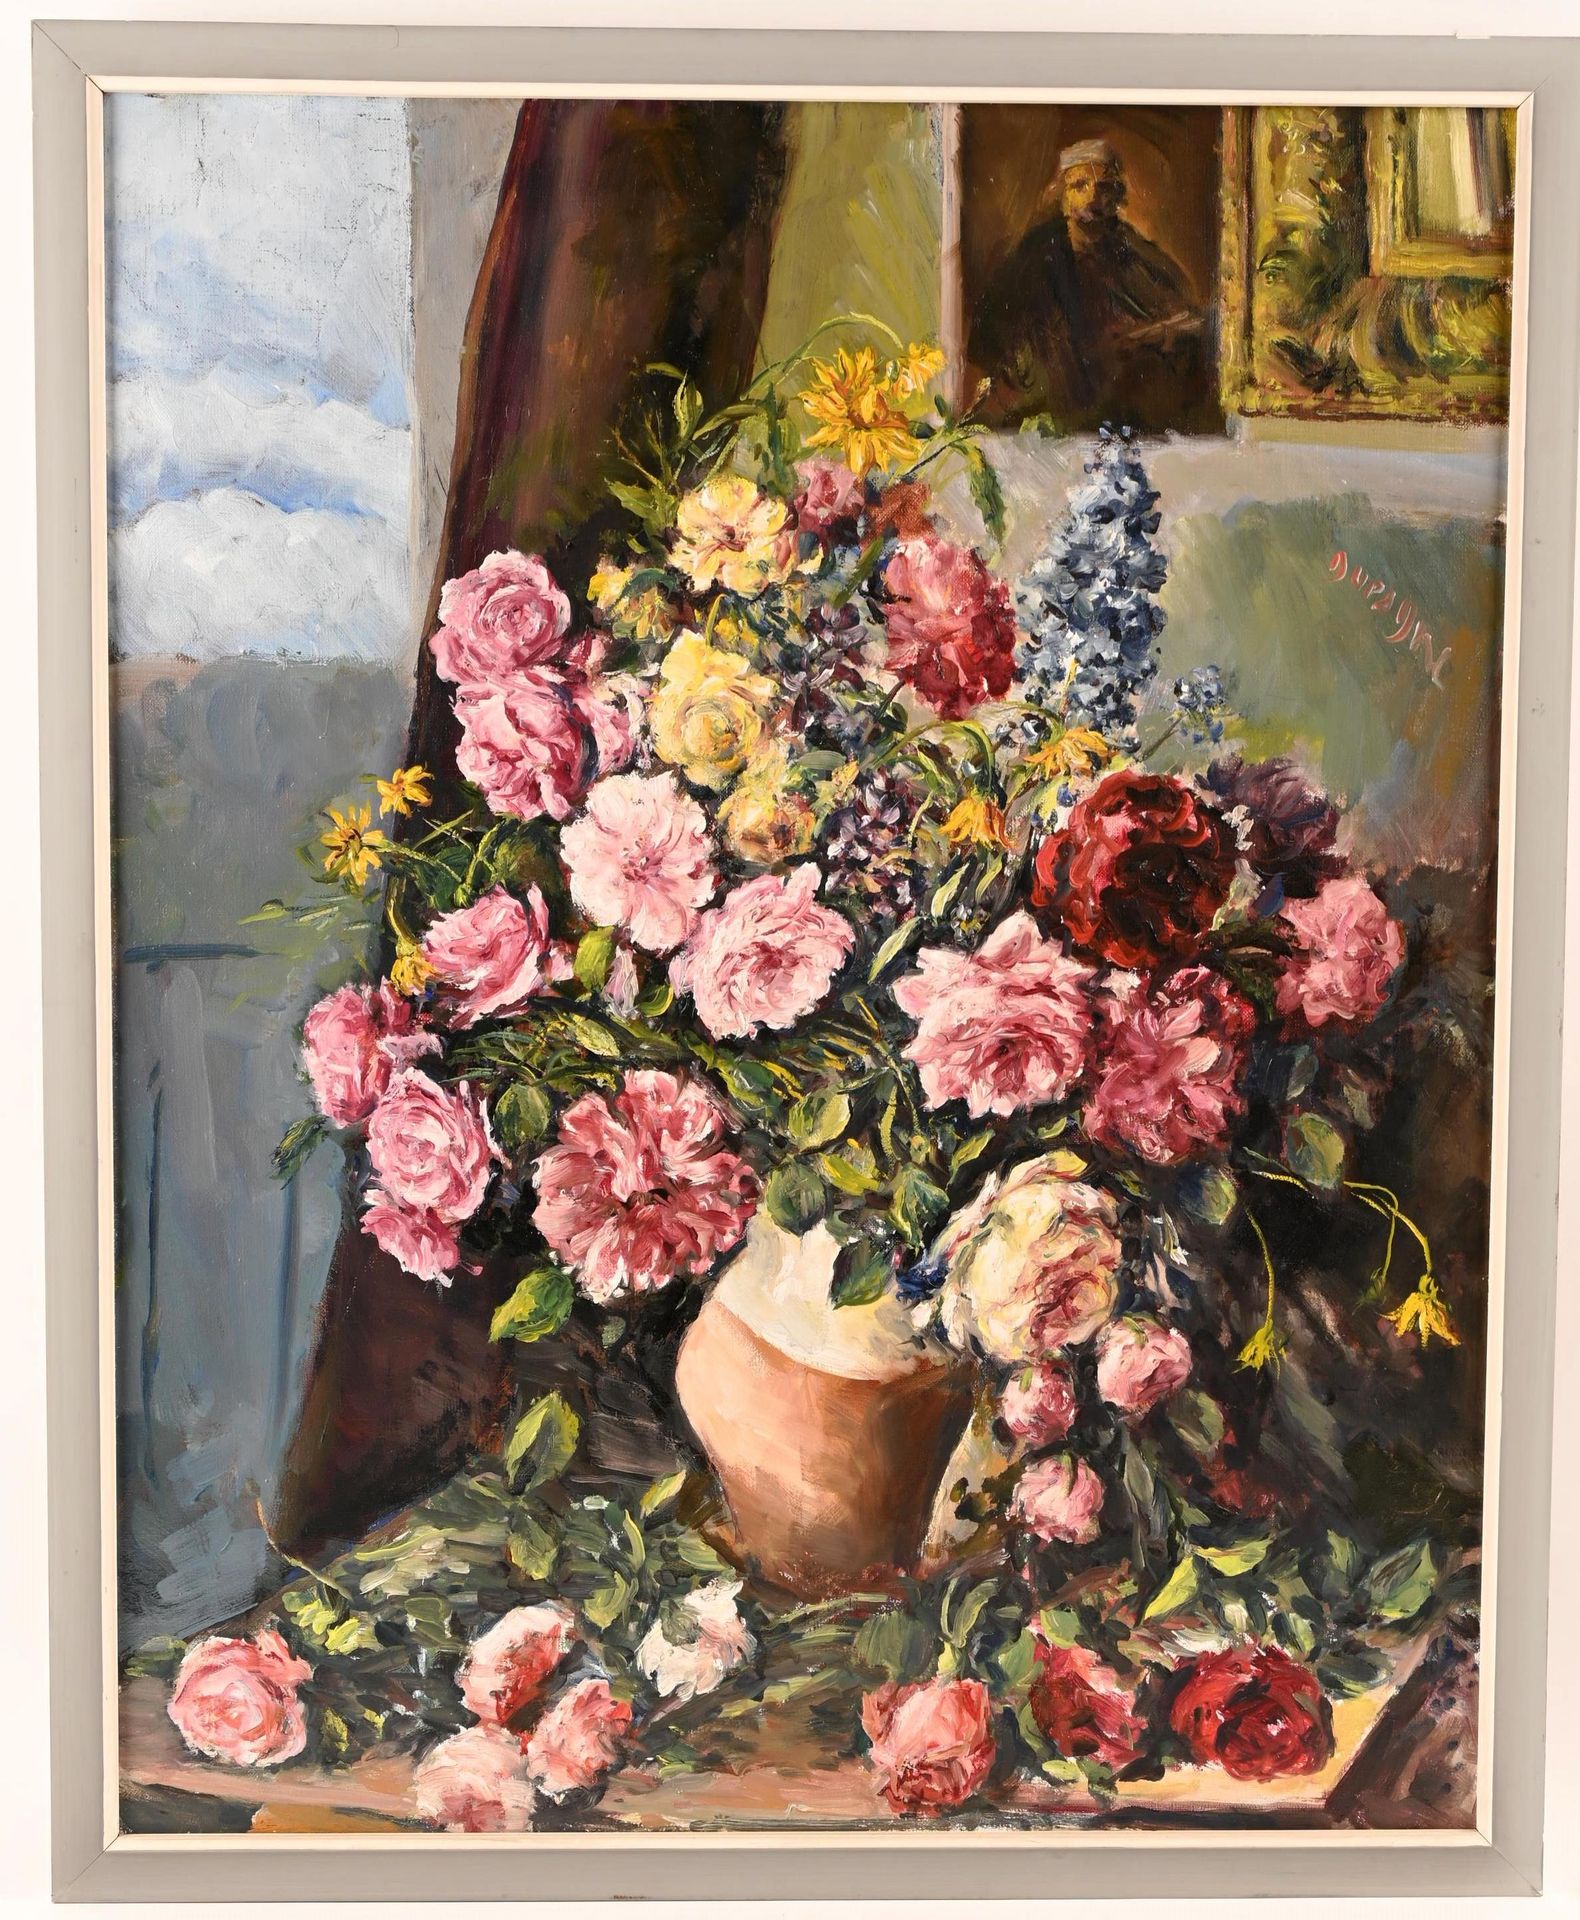 Adrien DUPAGNE (1889-1980 Adrien DUPAGNE (1889-1980)

"Flowered bouquet at the R&hellip;